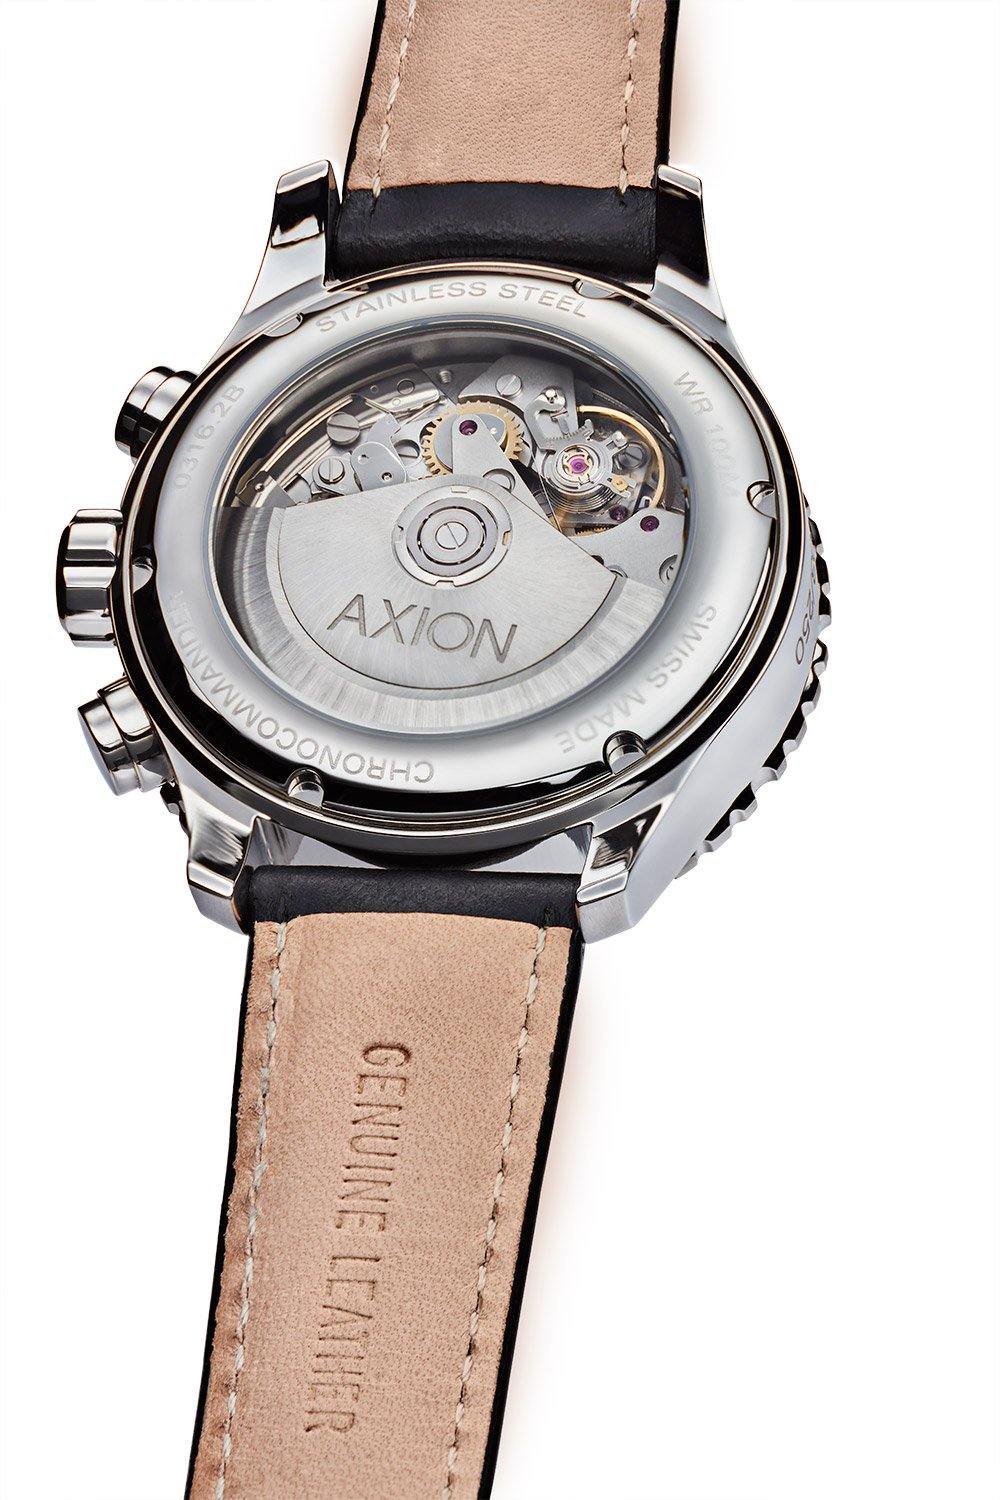 CHRONO COMMANDER WHITE CHRONOGRAPH - Axion Watch